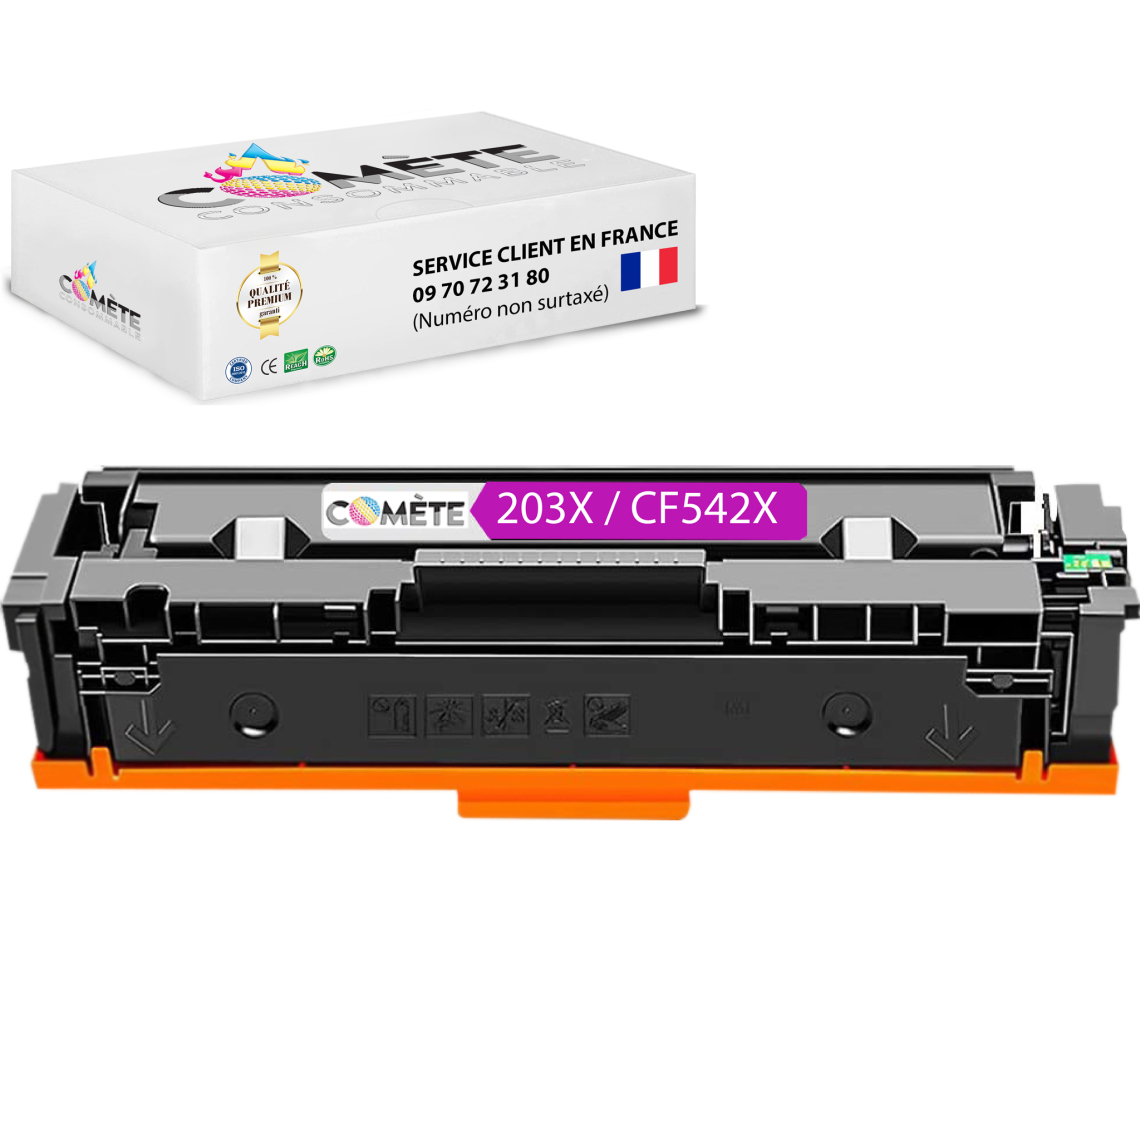 Comete Consommable - 203X 1 Toner compatible avec HP 203X (=203A Grande capacité) CF543X (203A CF540A) Magenta - Imprimante Laser